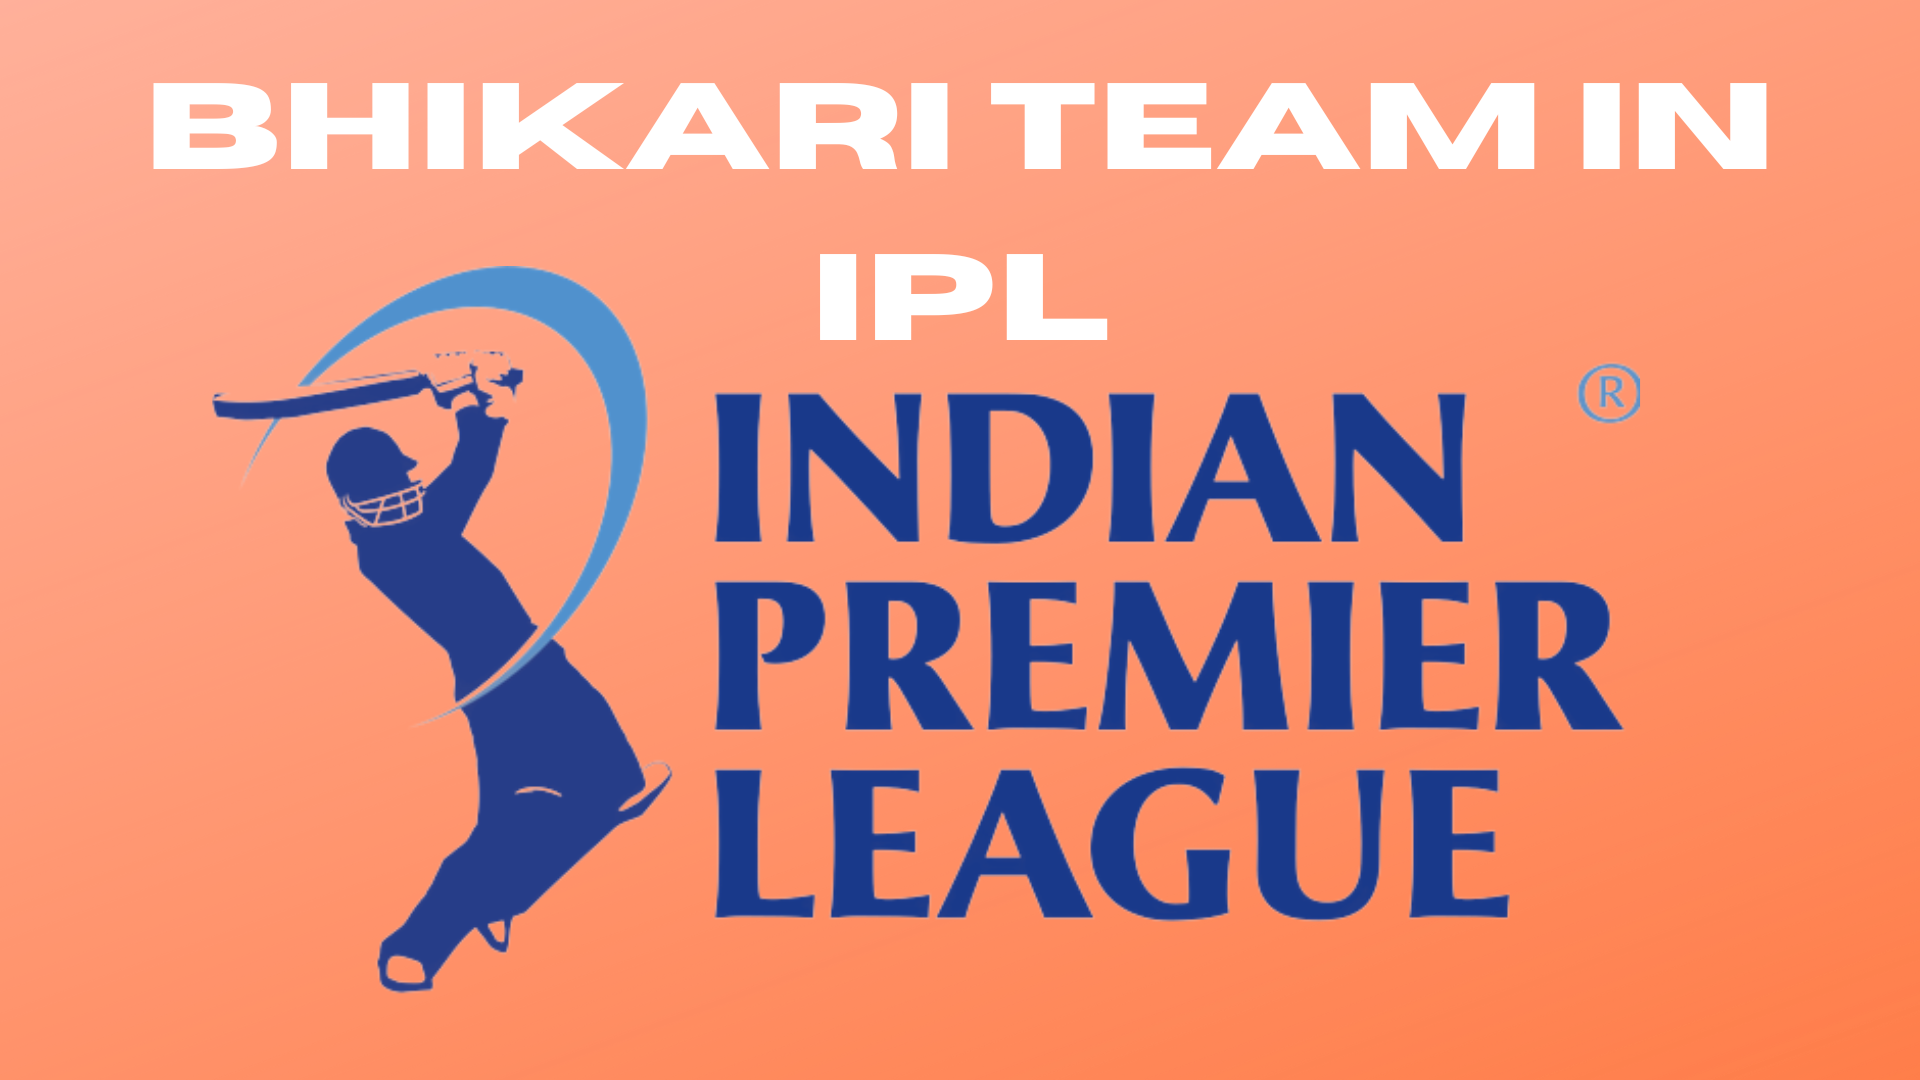 Bhikari Team in IPL: Struggles and Possible Solutions